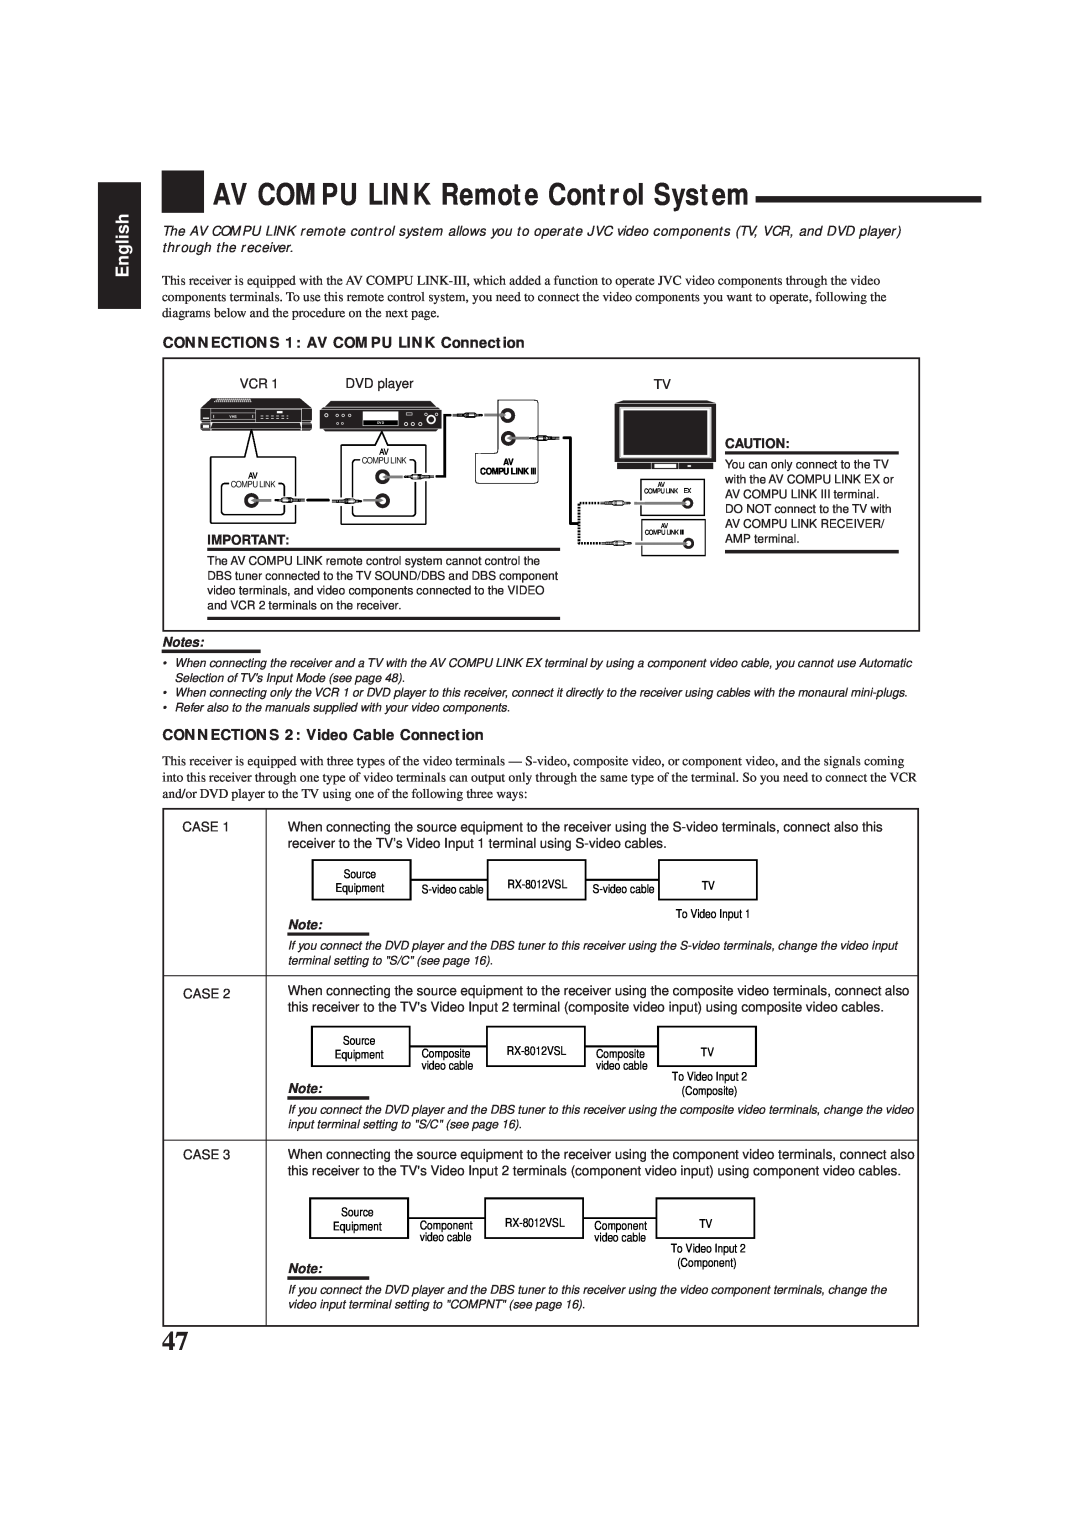 JVC RX-8012VSL manual AV COMPU LINK Remote Control System, English, CONNECTIONS 1 AV COMPU LINK Connection 